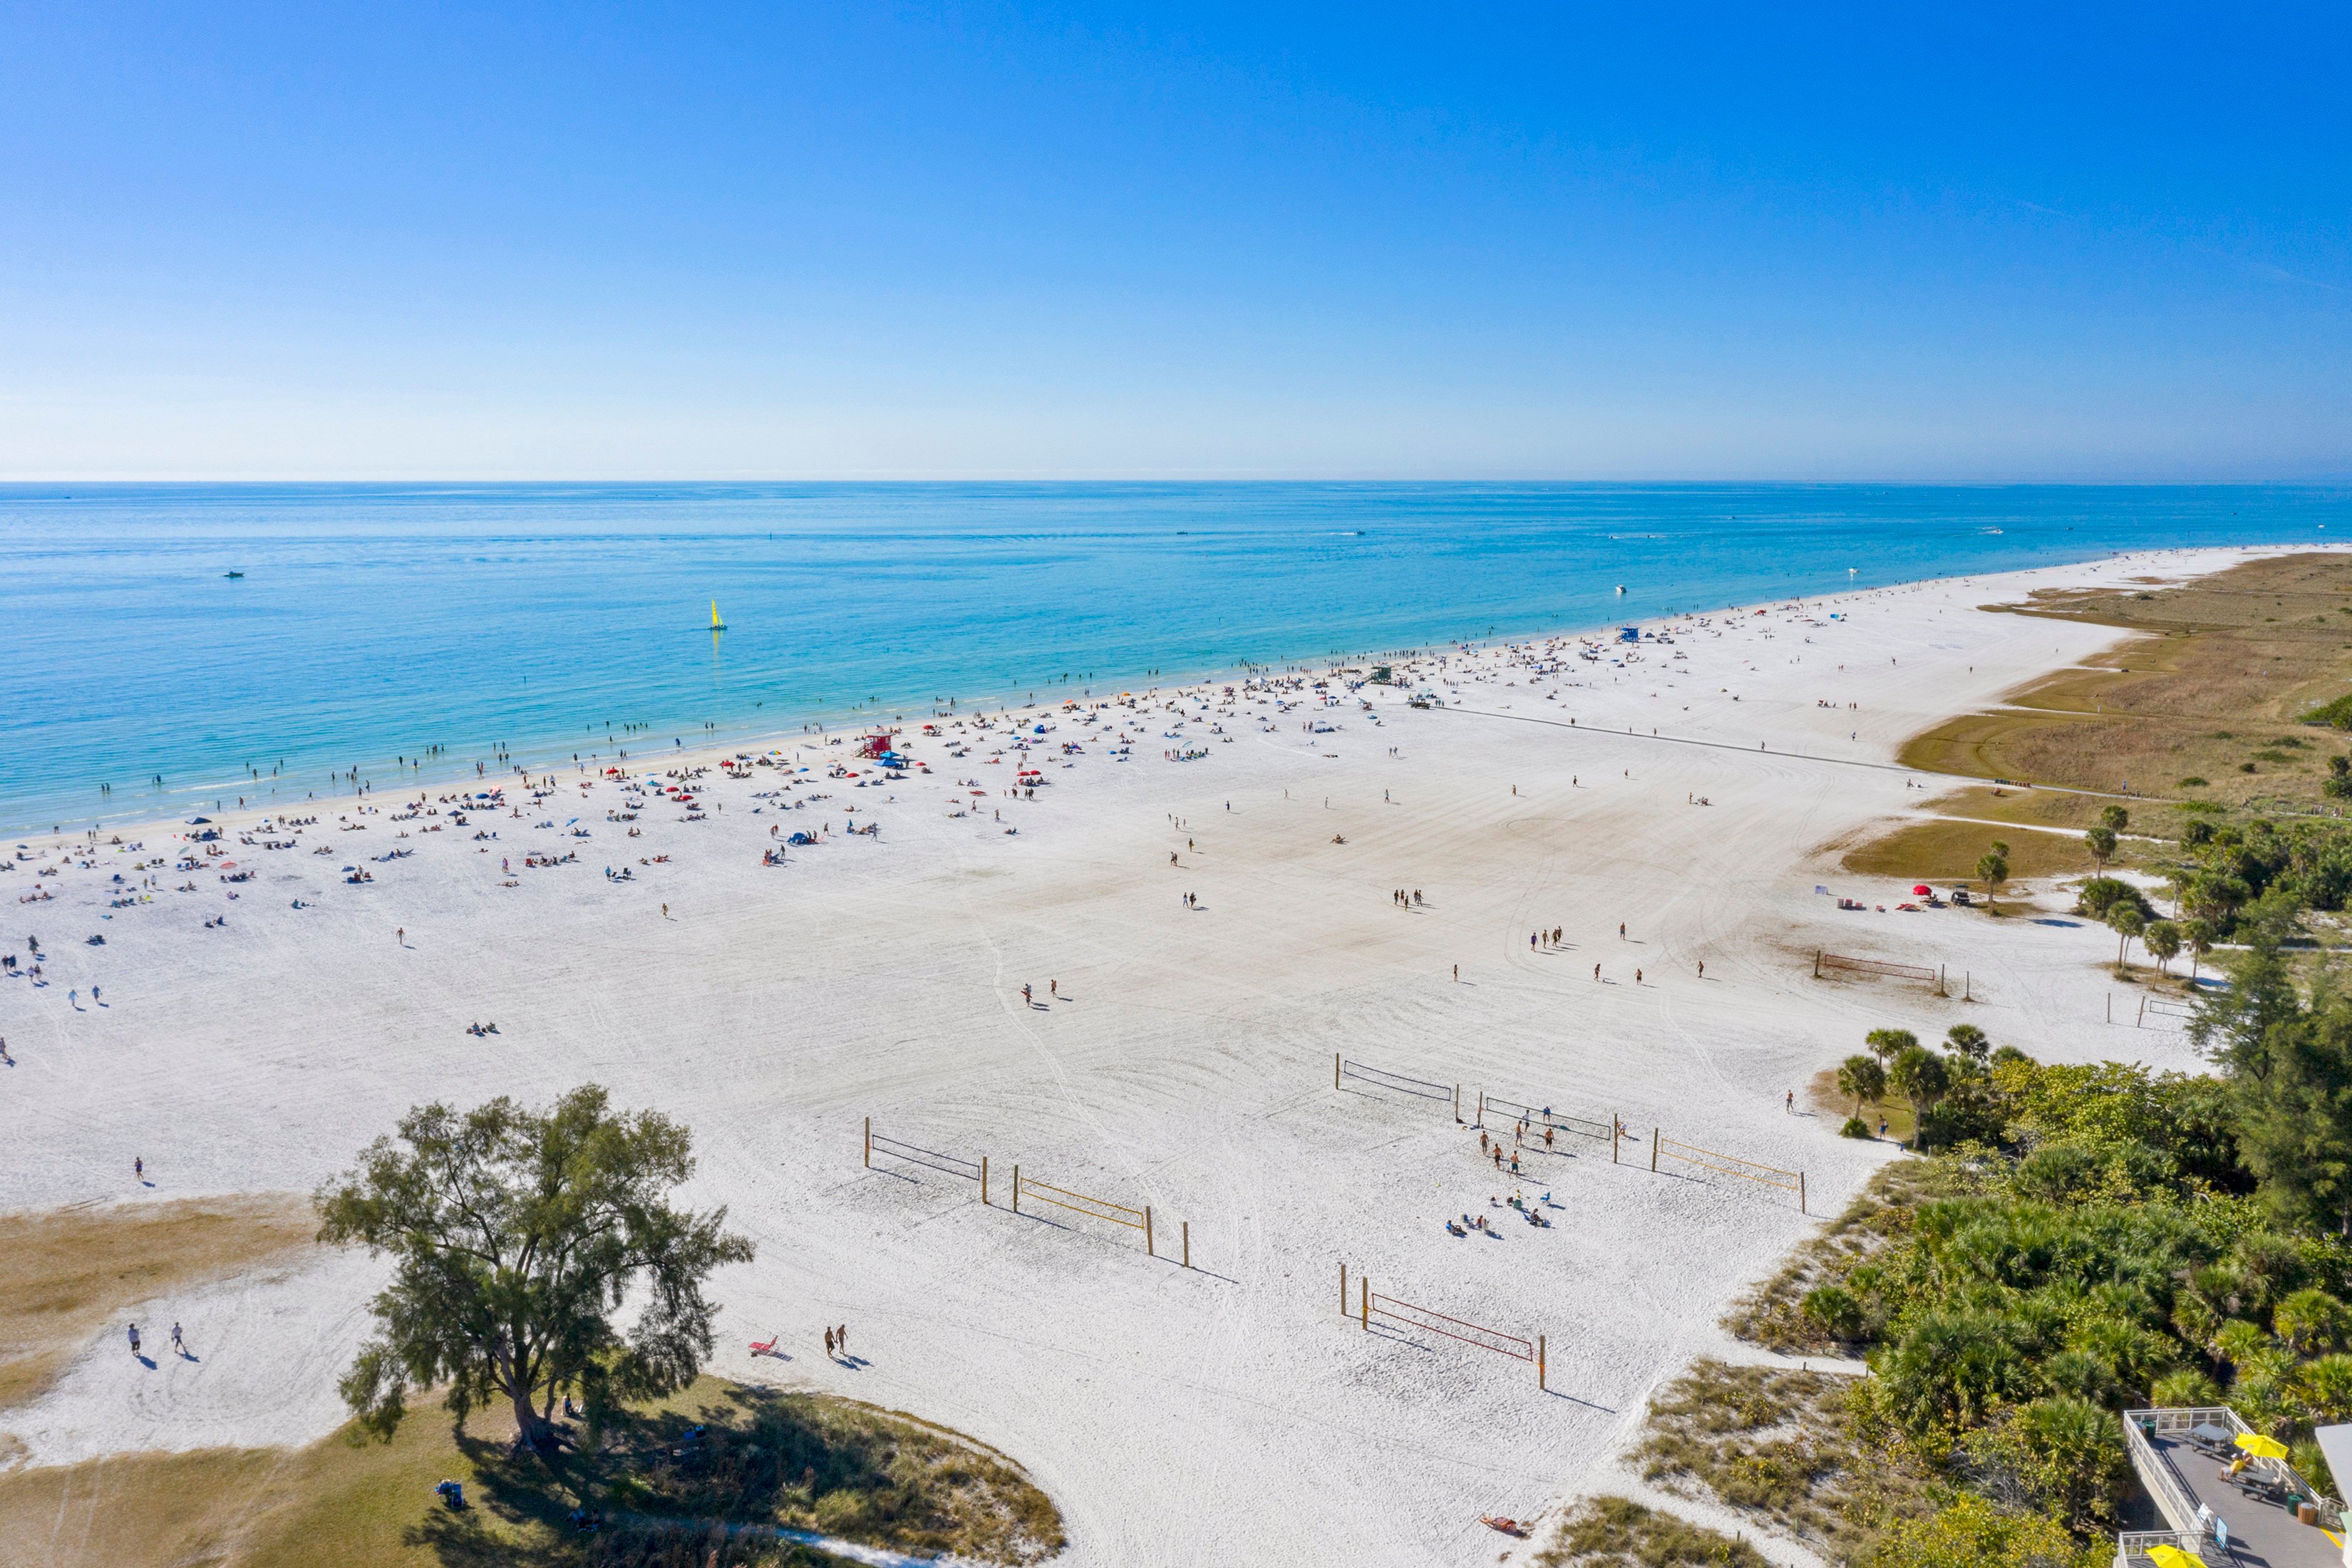 Near some of Florida's most pristine beaches